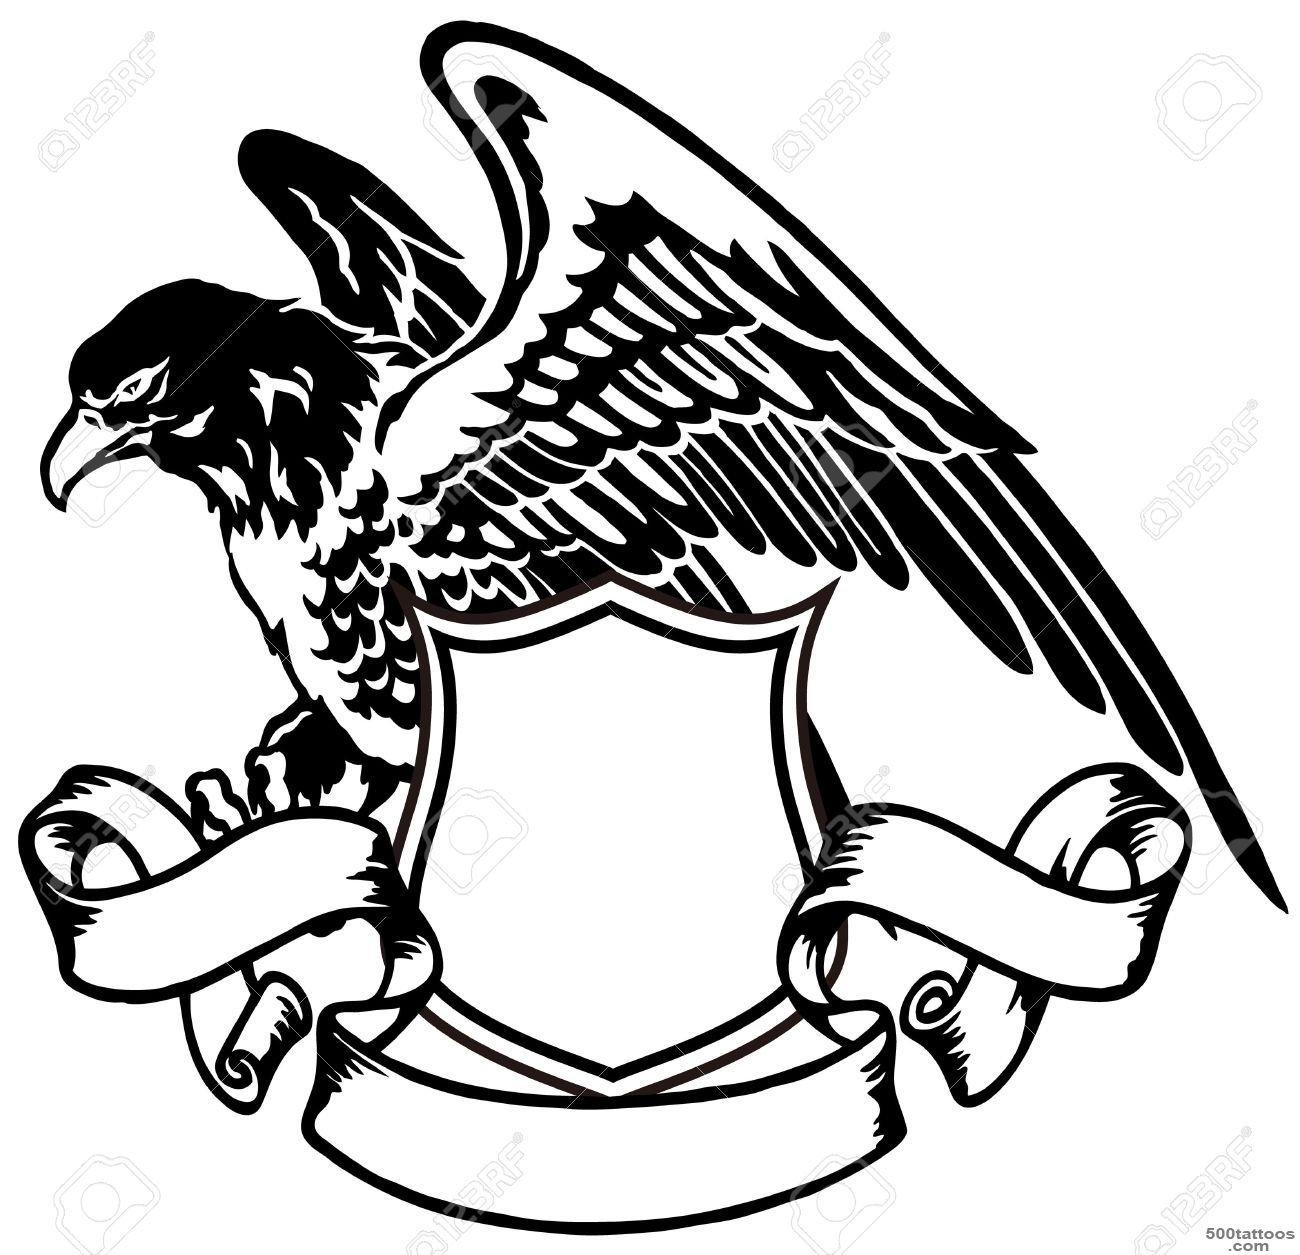 Emblem Of Eagle Royalty Free Cliparts, Vectors, And Stock ..._27